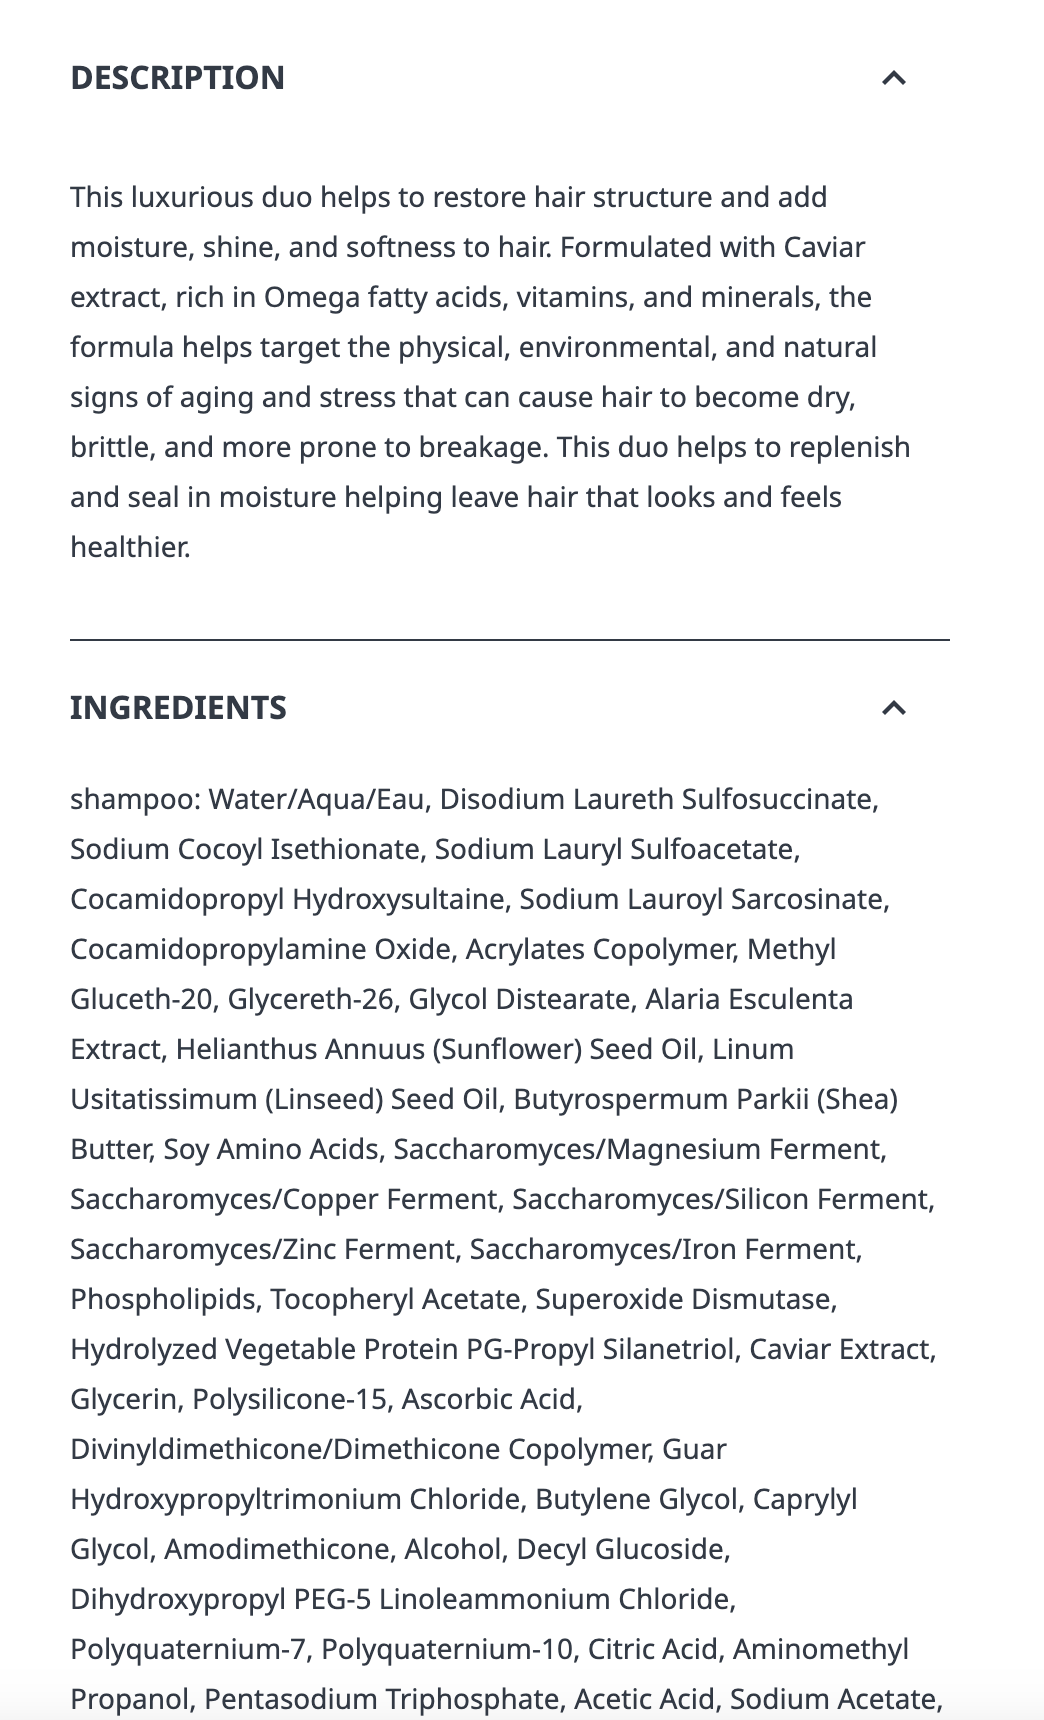 Alterna Caviar Anti-Aging Replenishing Moisture Shampoo & Conditioner Liter Bundle